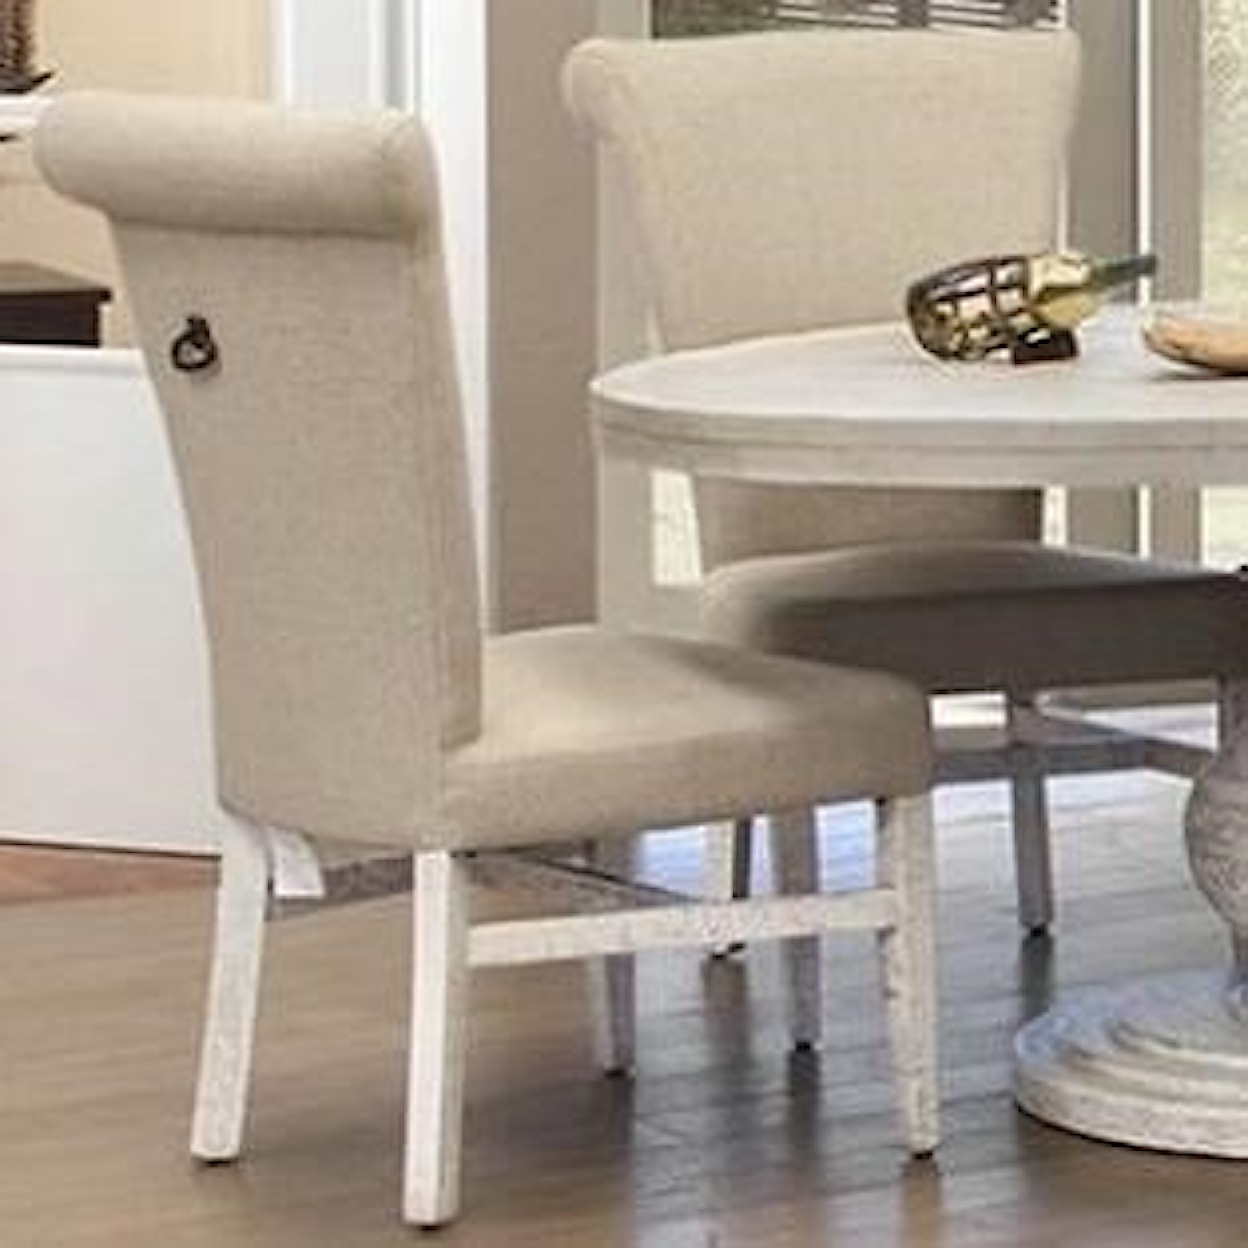 International Furniture Direct Bonanza Upholstered Side Chair